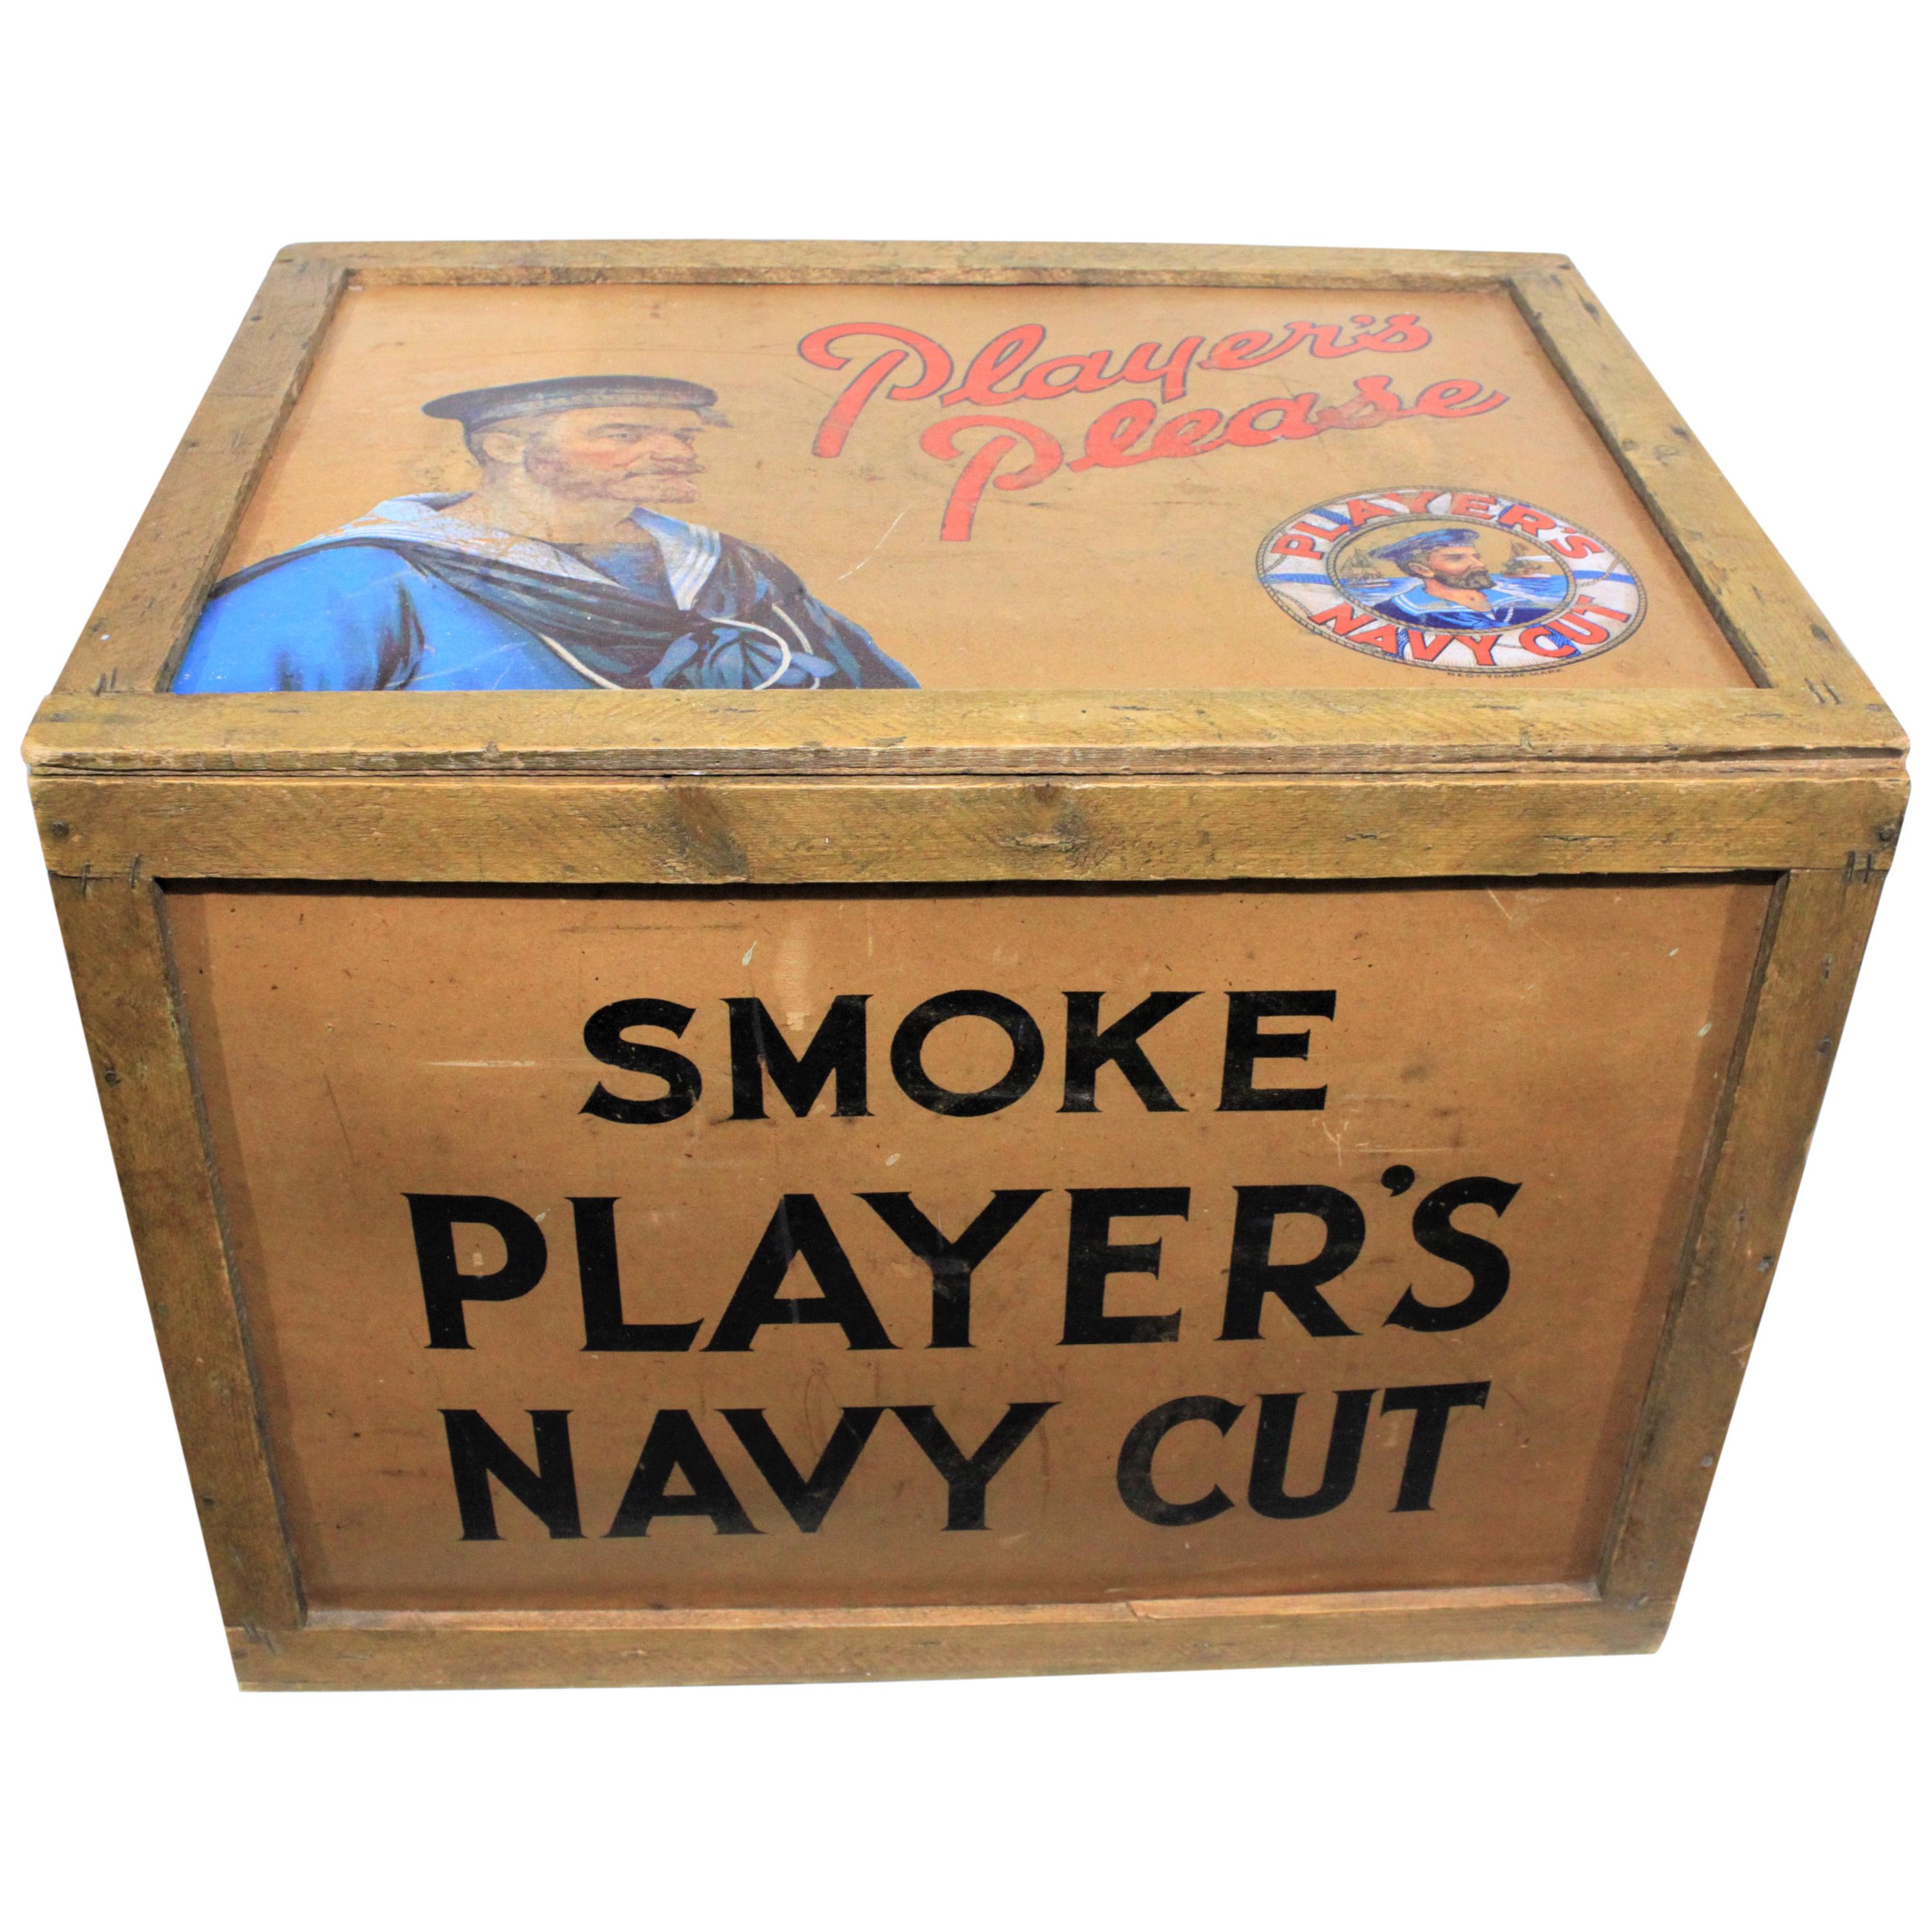 Vintage John Players Navy Cut Zigaretten Werbe-Shipping Crate oder Box, Vintage